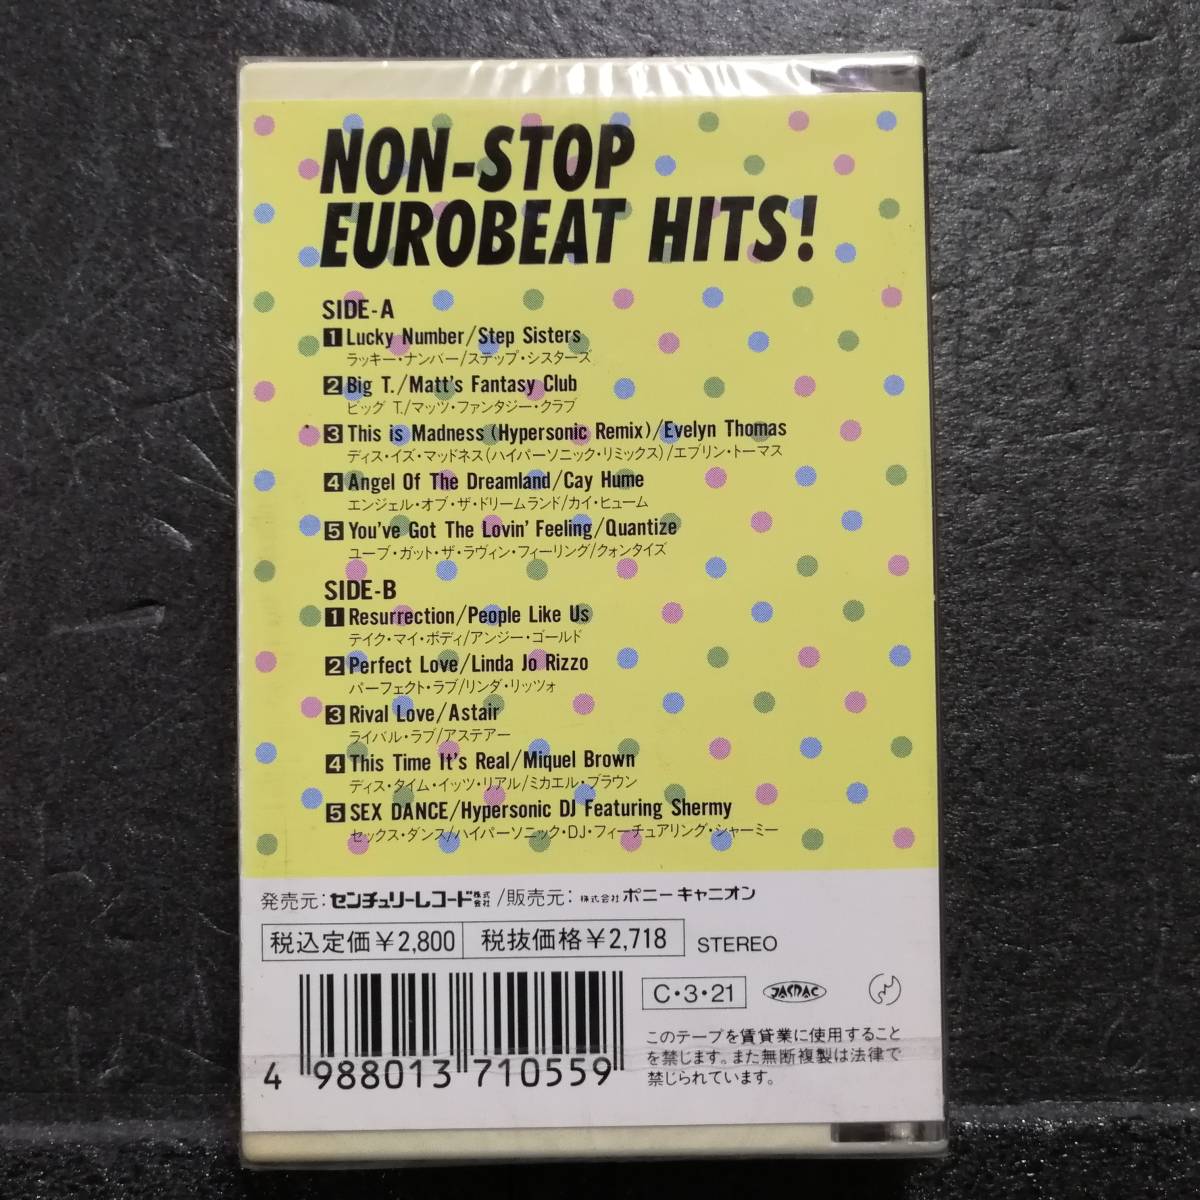  нераспечатанный кассетная лента NON-STOP EUROBEAT HITS! non - Stop * euro beat *hitsu!